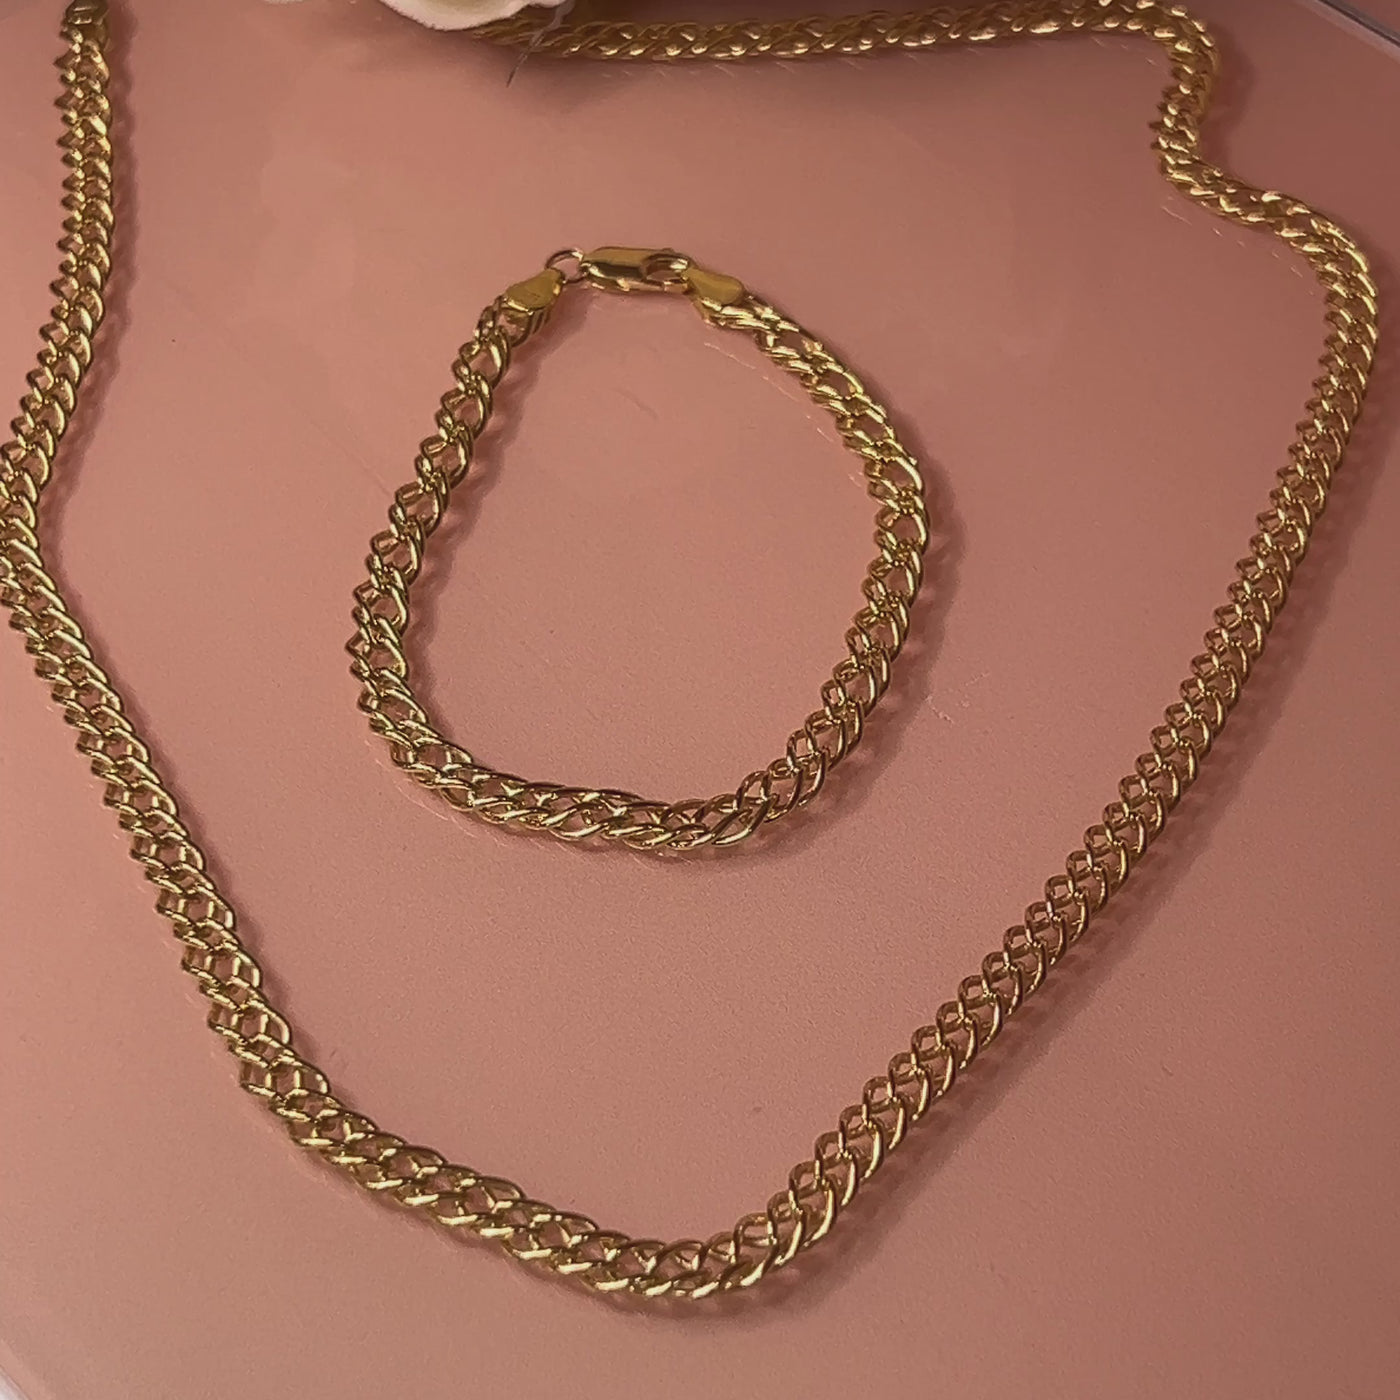 9ct Gold Fancy Double Link Necklace - 50cm length.